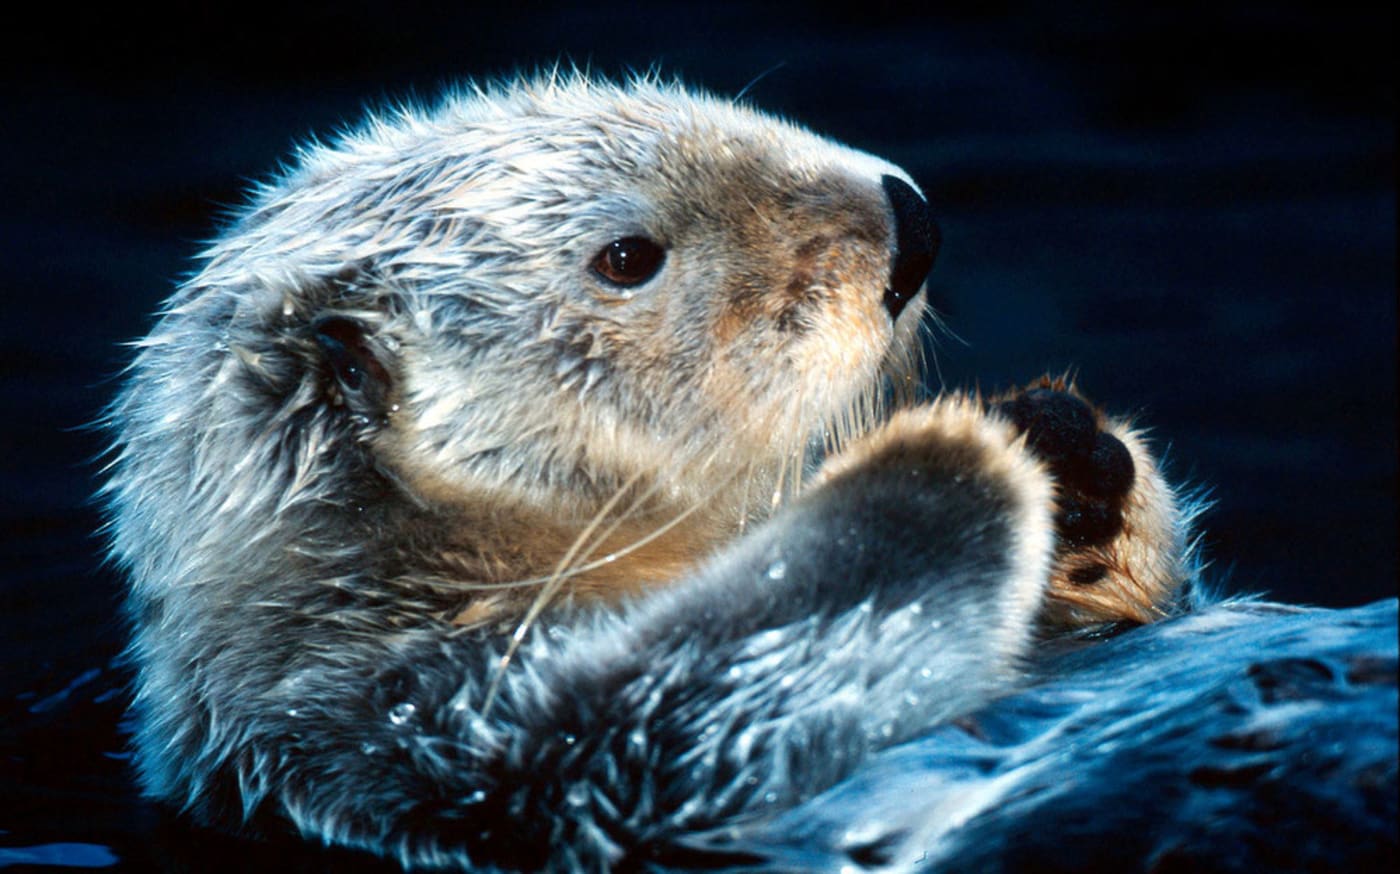 Sea otter in Alaska= USA